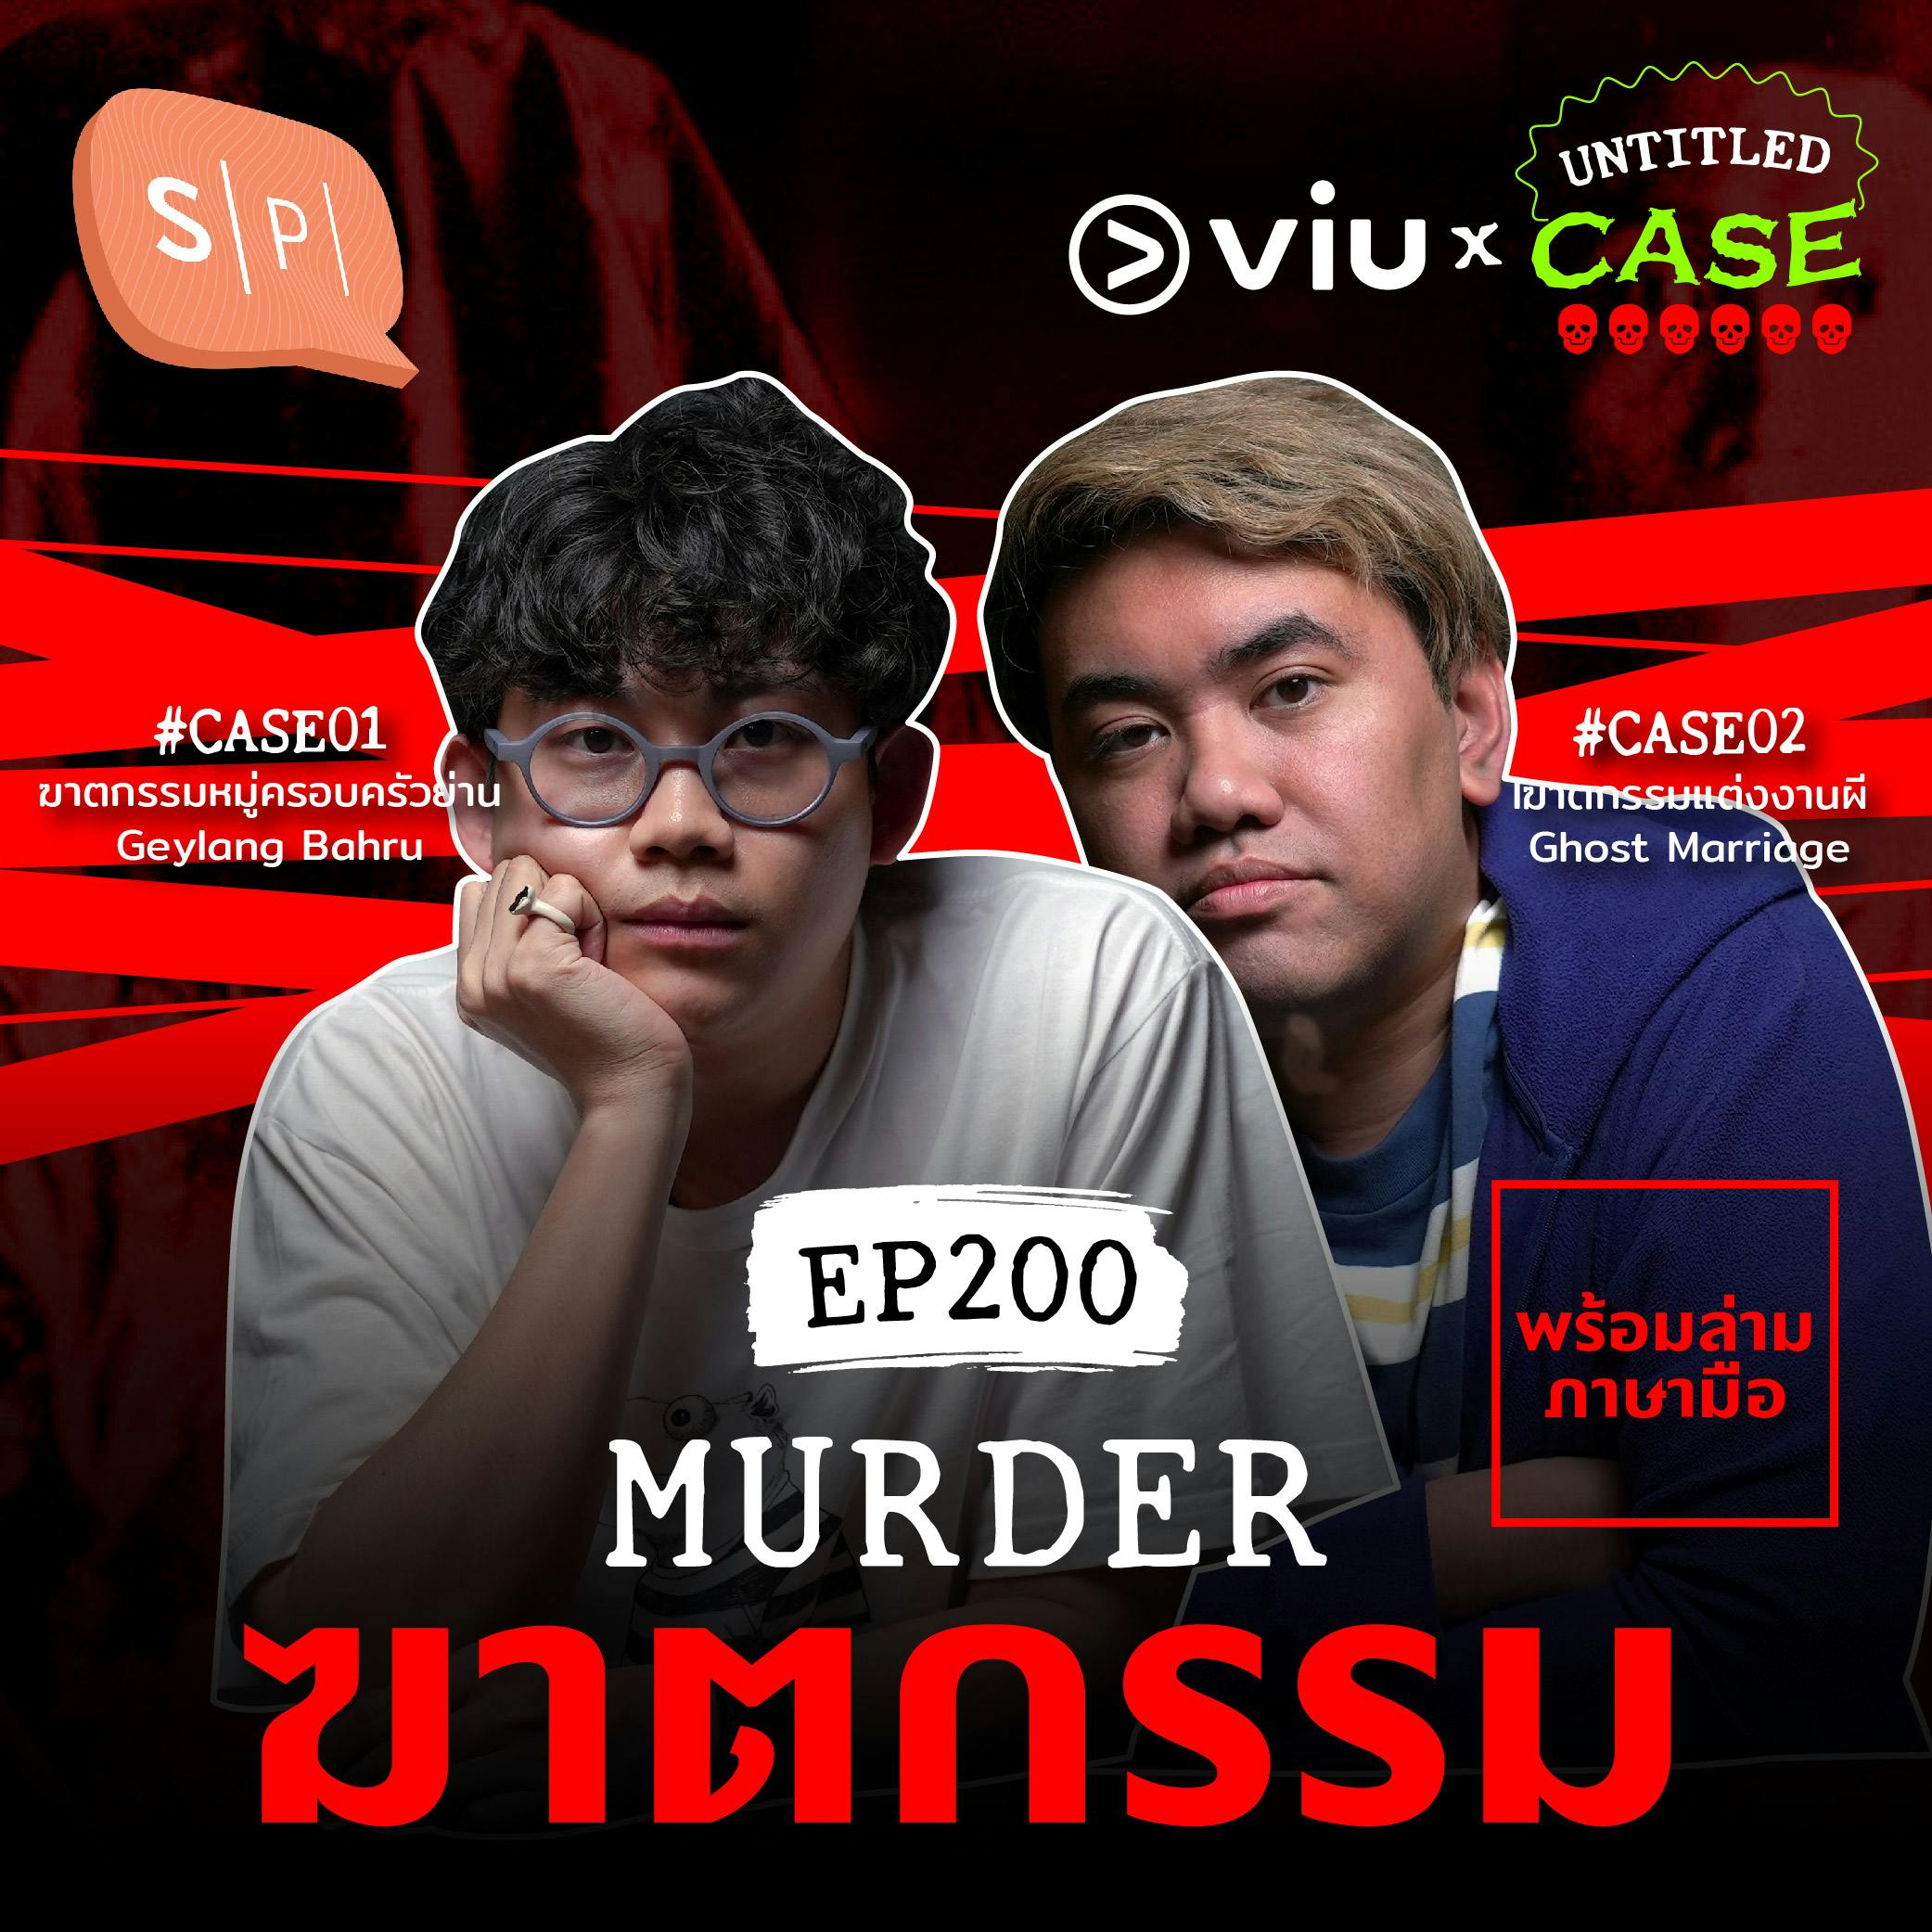 Murder ฆาตกรรม | Untitled Case EP200